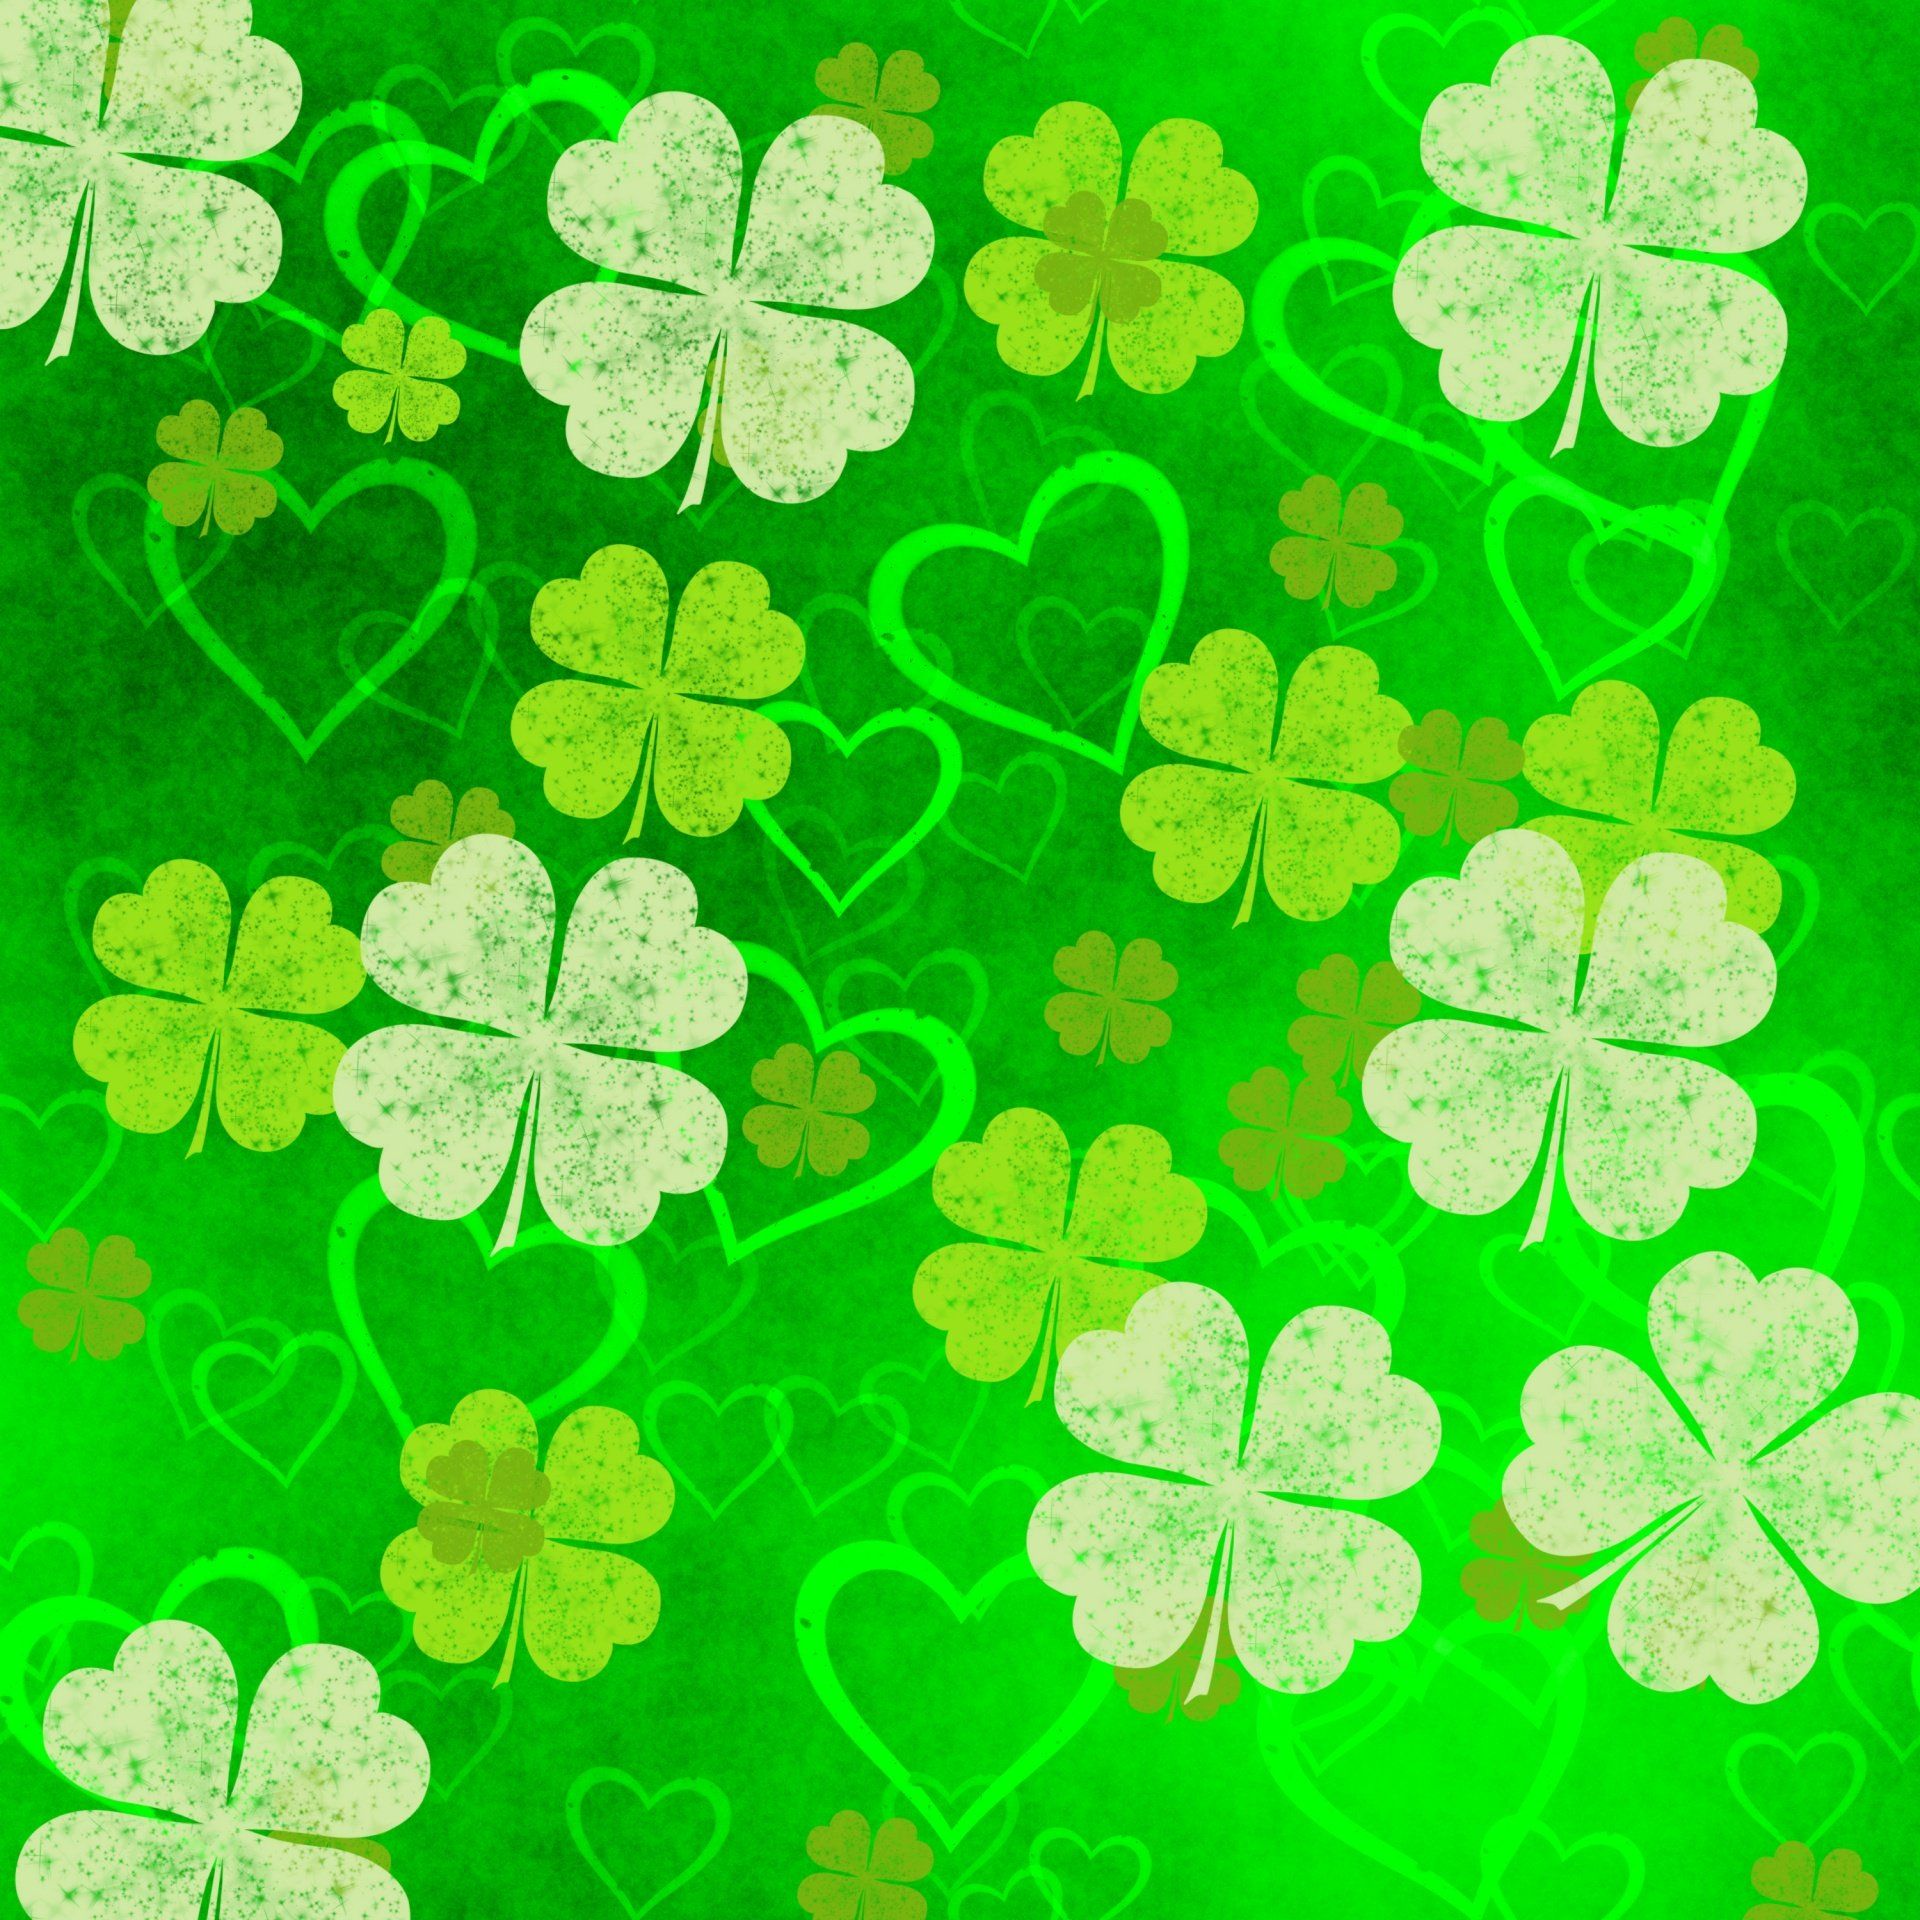 St. Patrick's Day Image to Post on Social Media 9 St. Patrick's